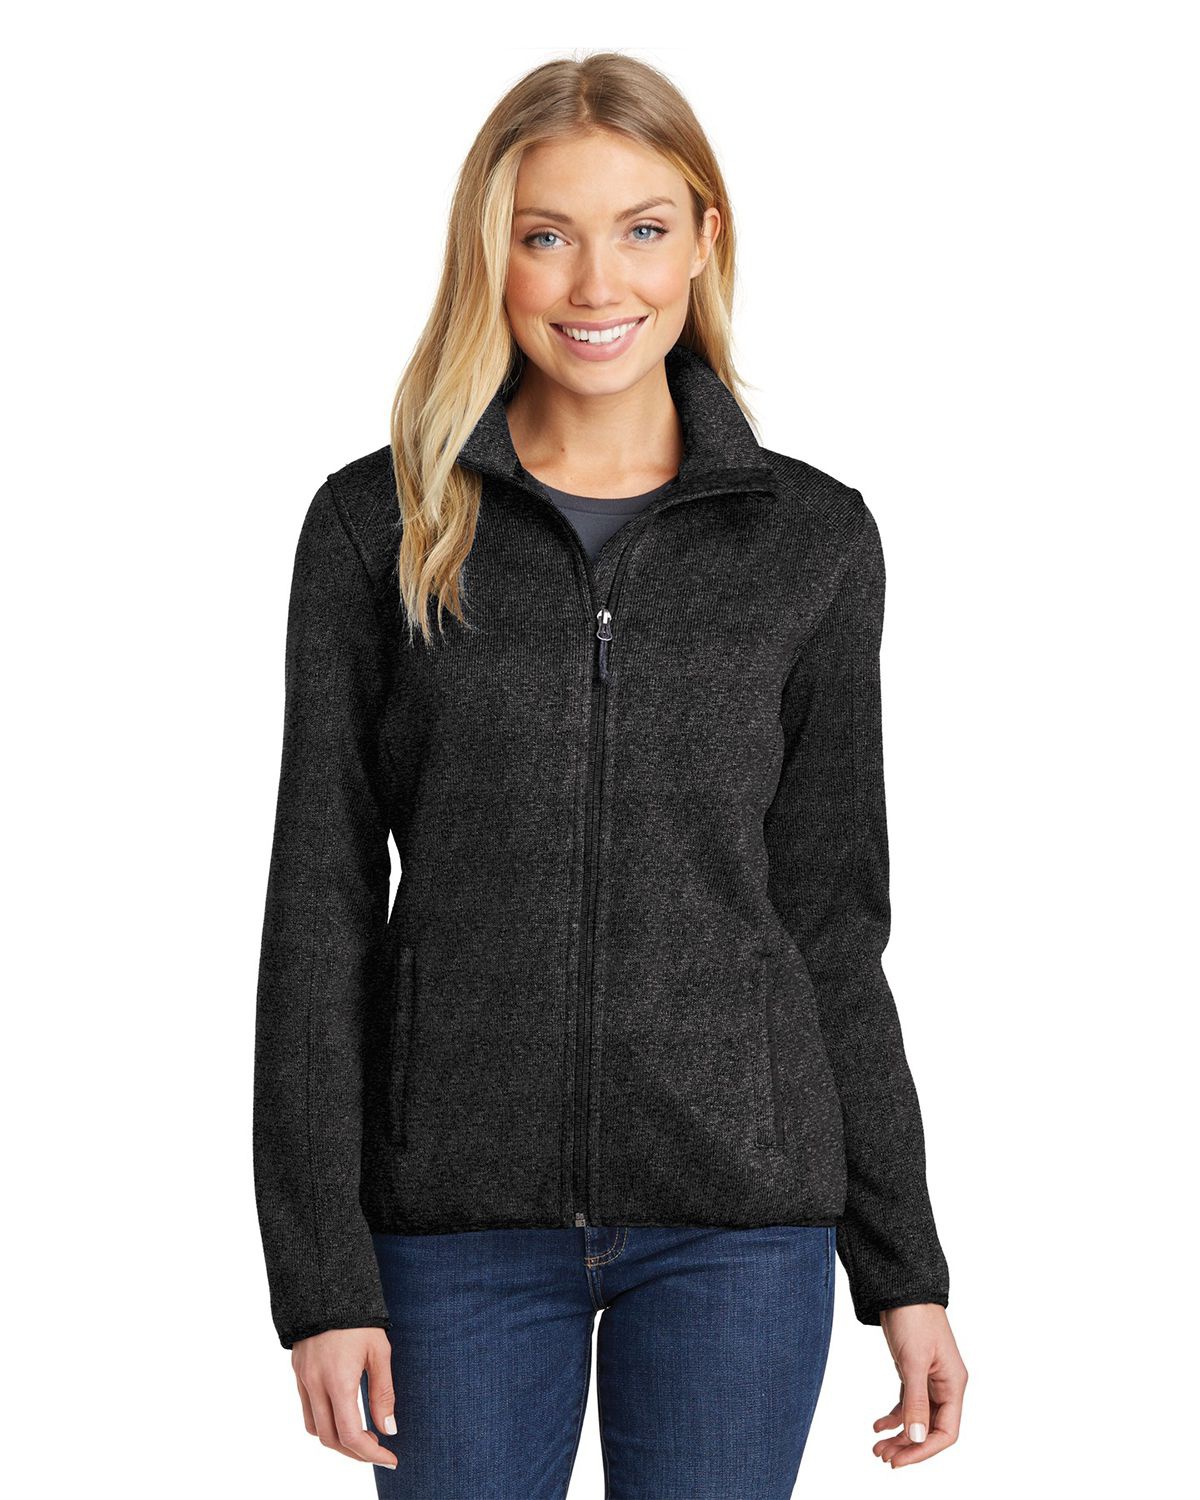 'Port Authority L232 Ladies Sweater Fleece Jacket'